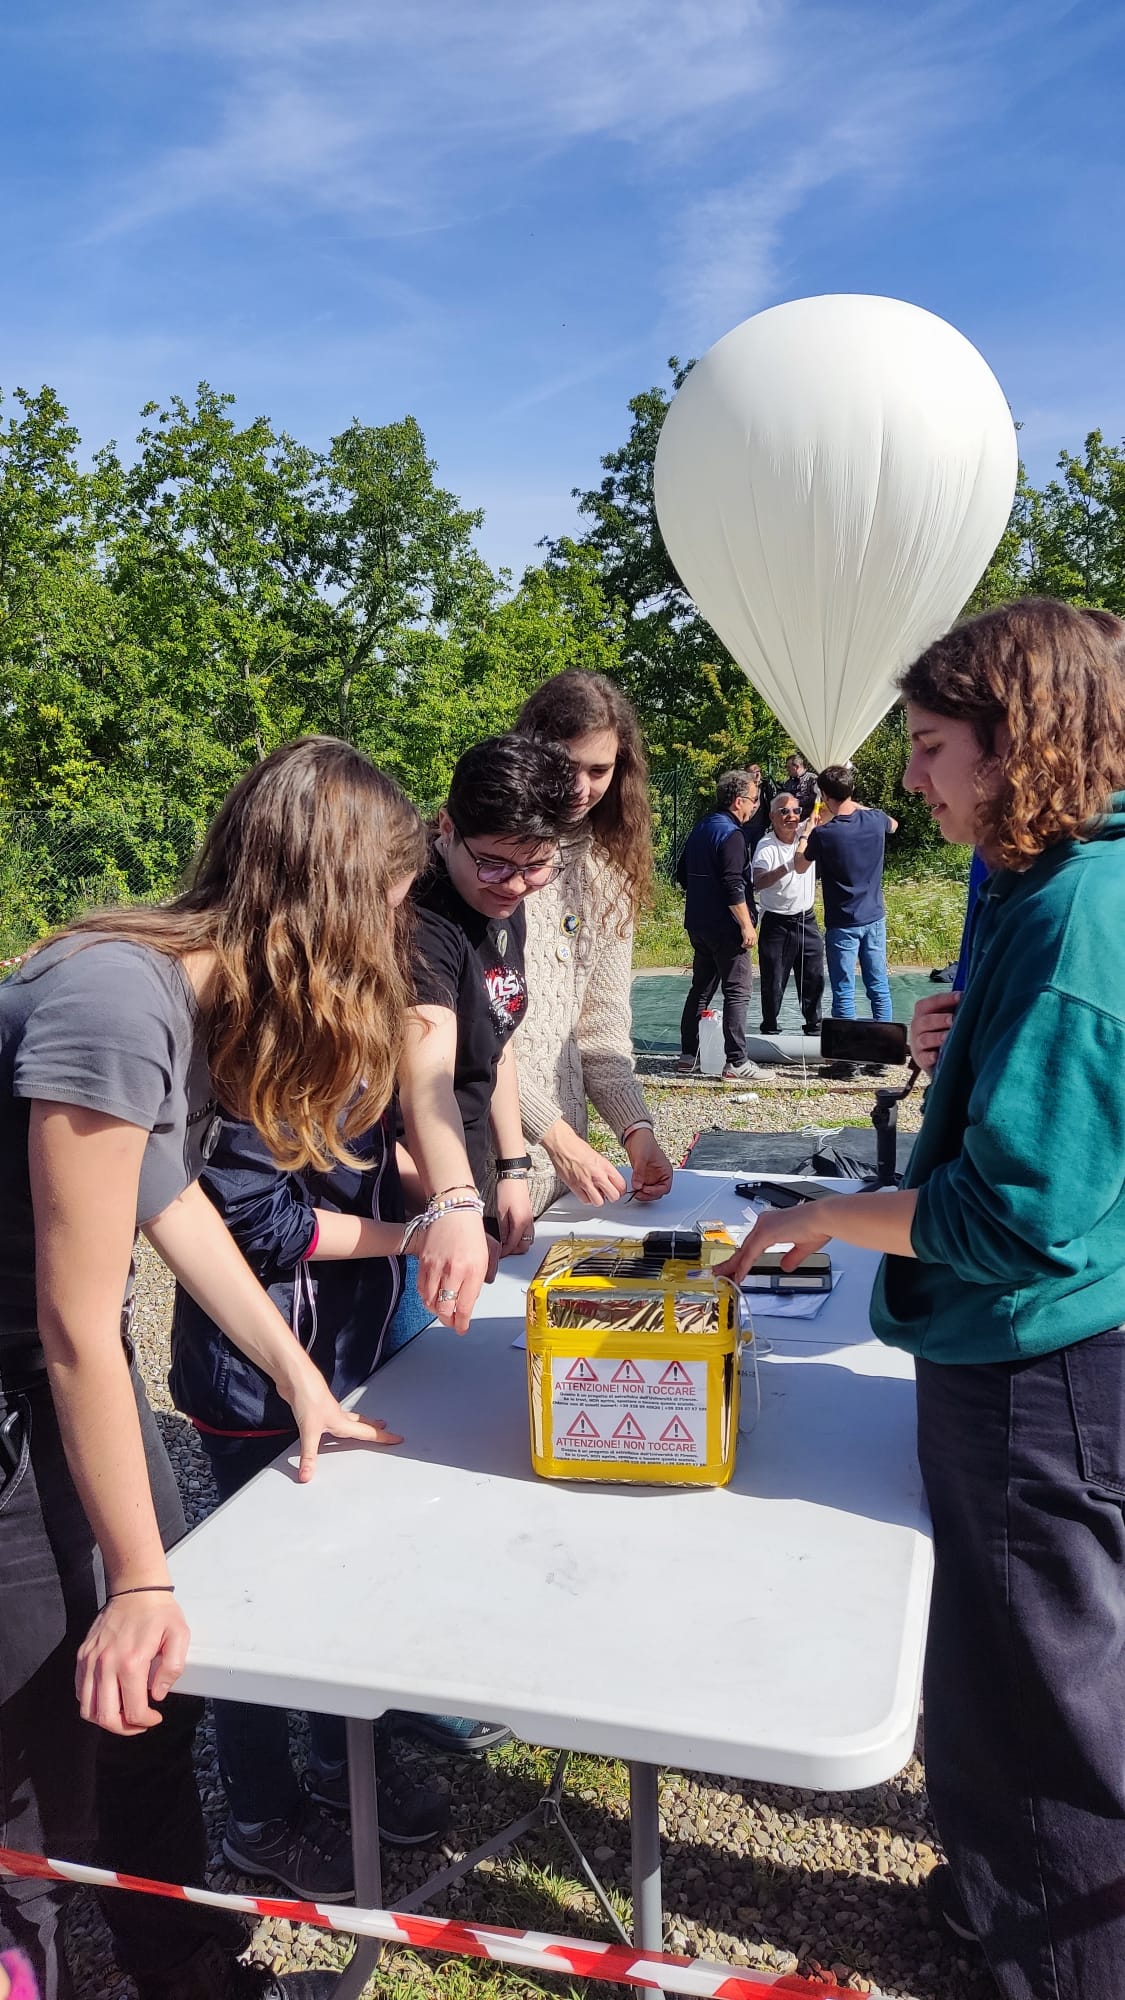 Stratospheric Balloon for Atmospheric Measurements